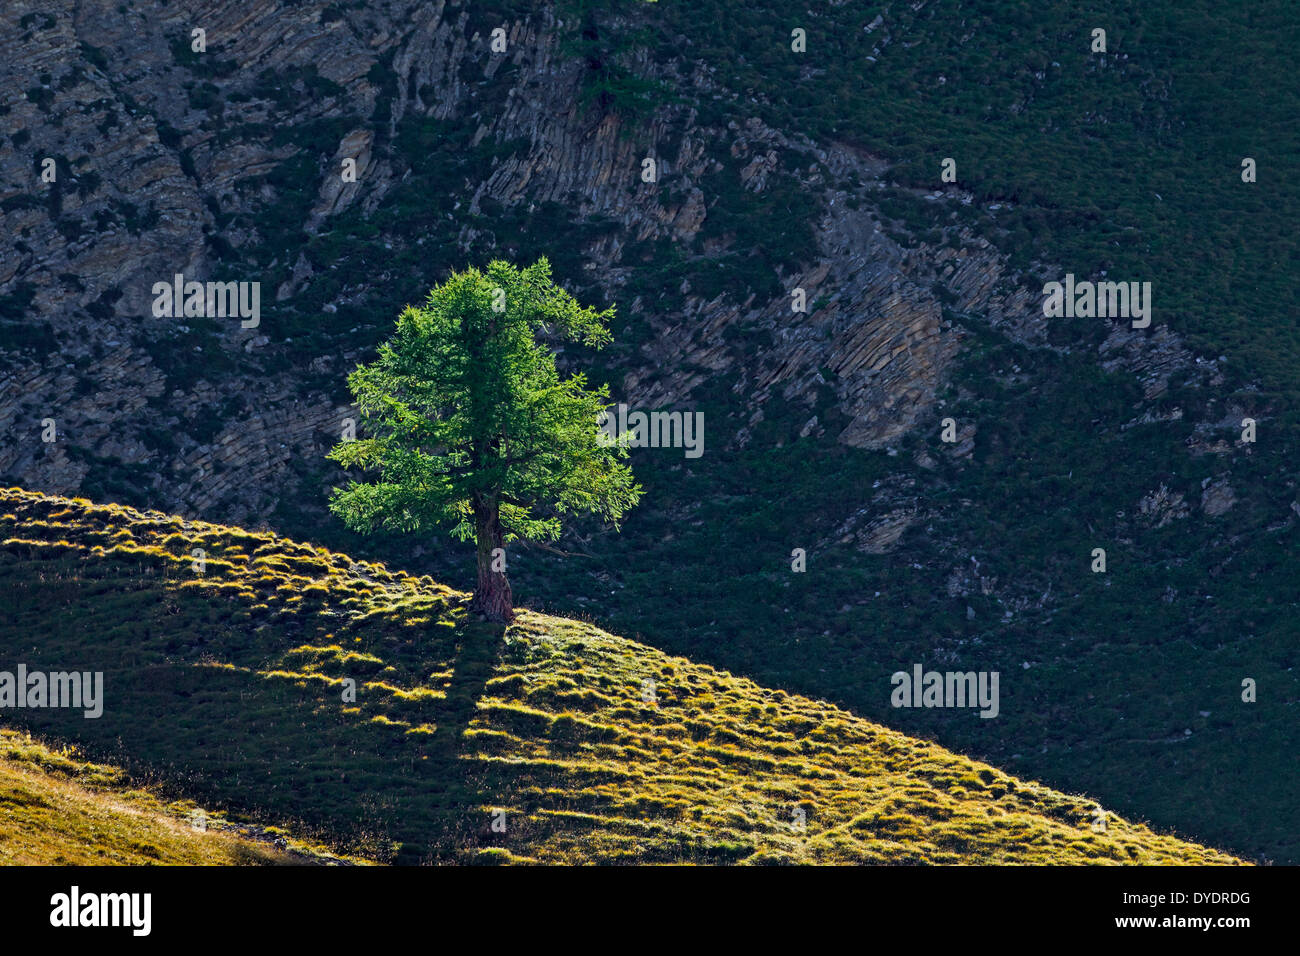 Common larch / European larch (Larix decidua) single tree growing on mountain slope in the Alpine mountains, Alps Stock Photo